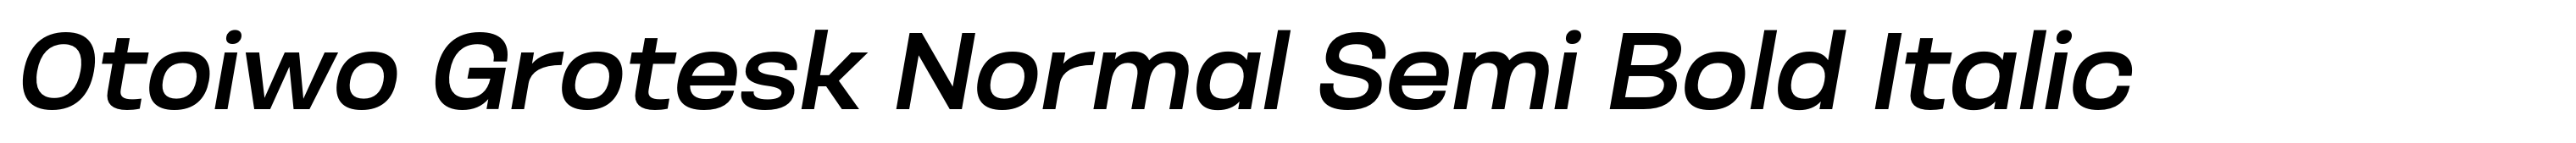 Otoiwo Grotesk Normal Semi Bold Italic